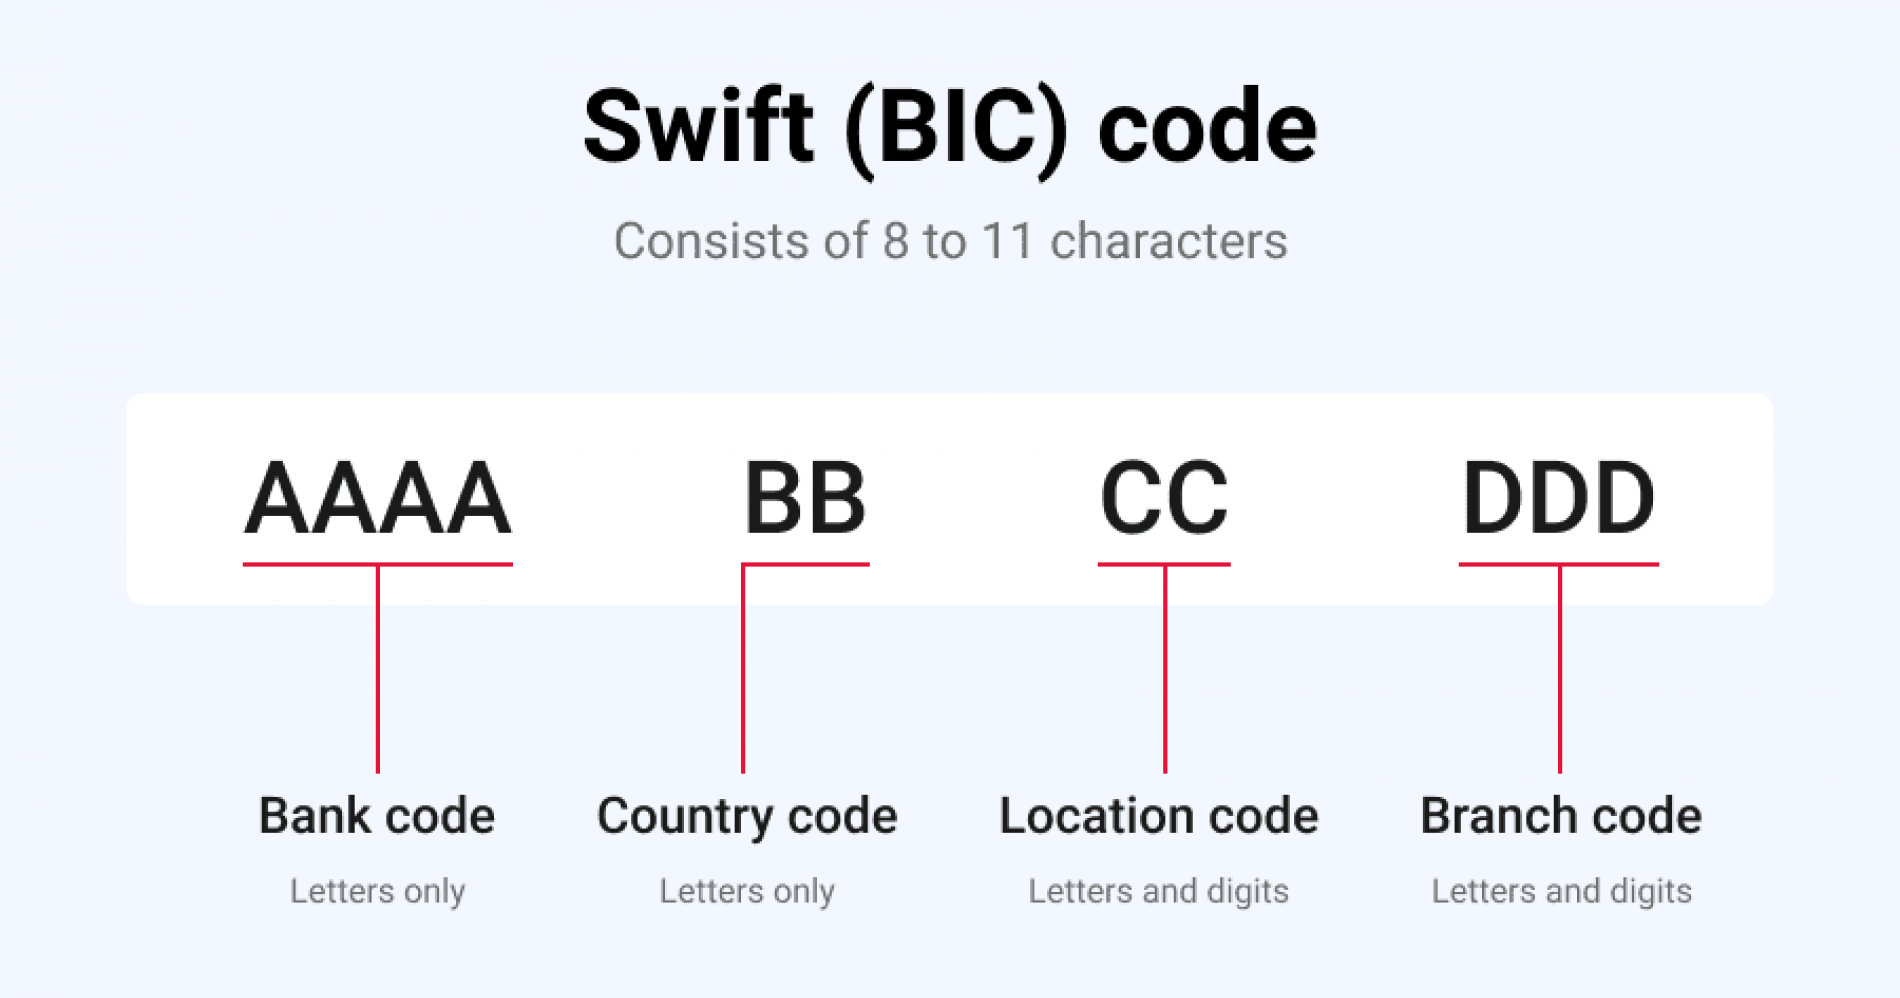 Contoh swift code